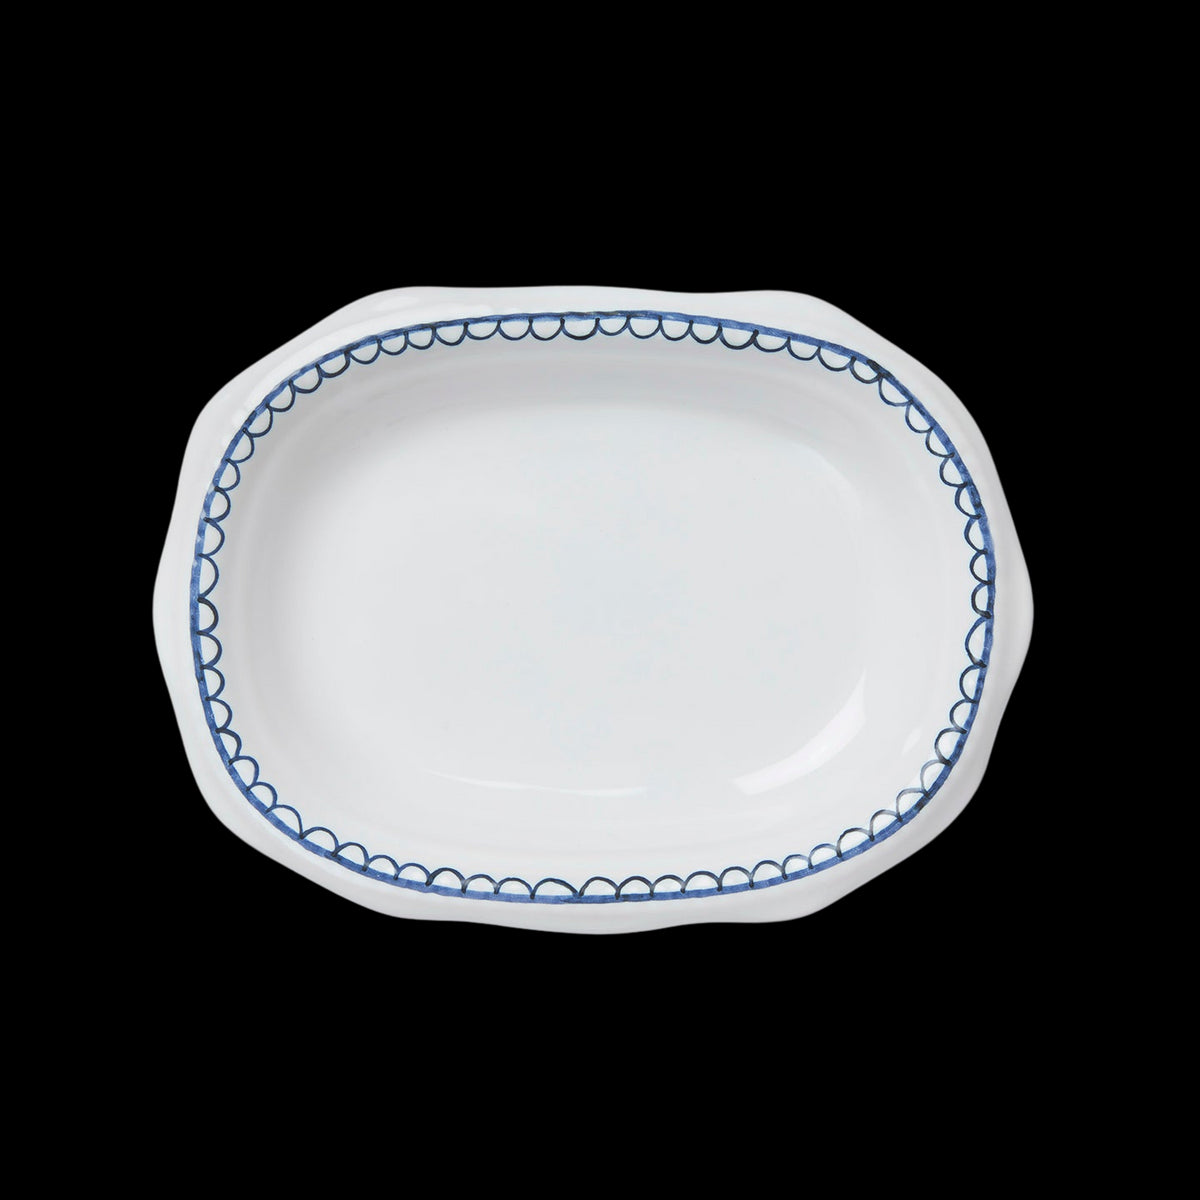 Bouclette Oval Perle Petite Plate in Blue